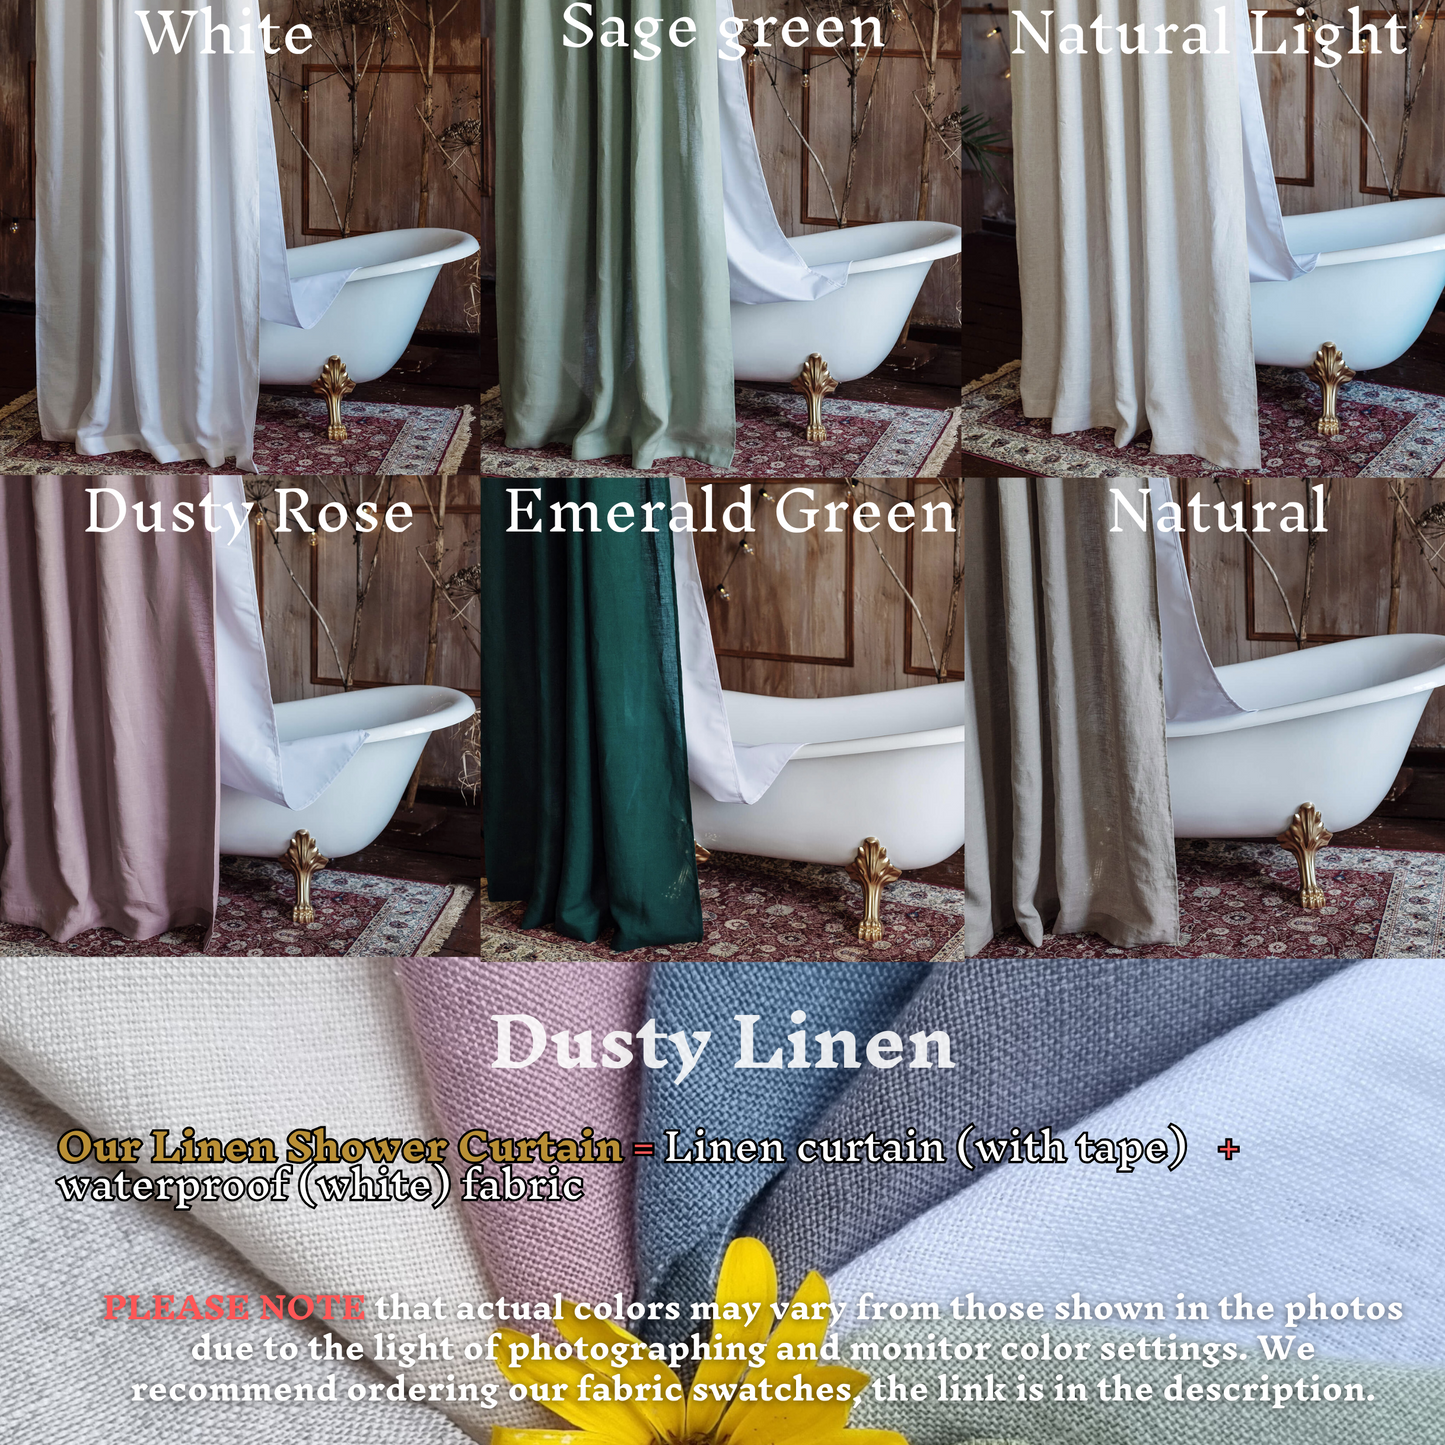 Linen Shower curtain in Safari Green color